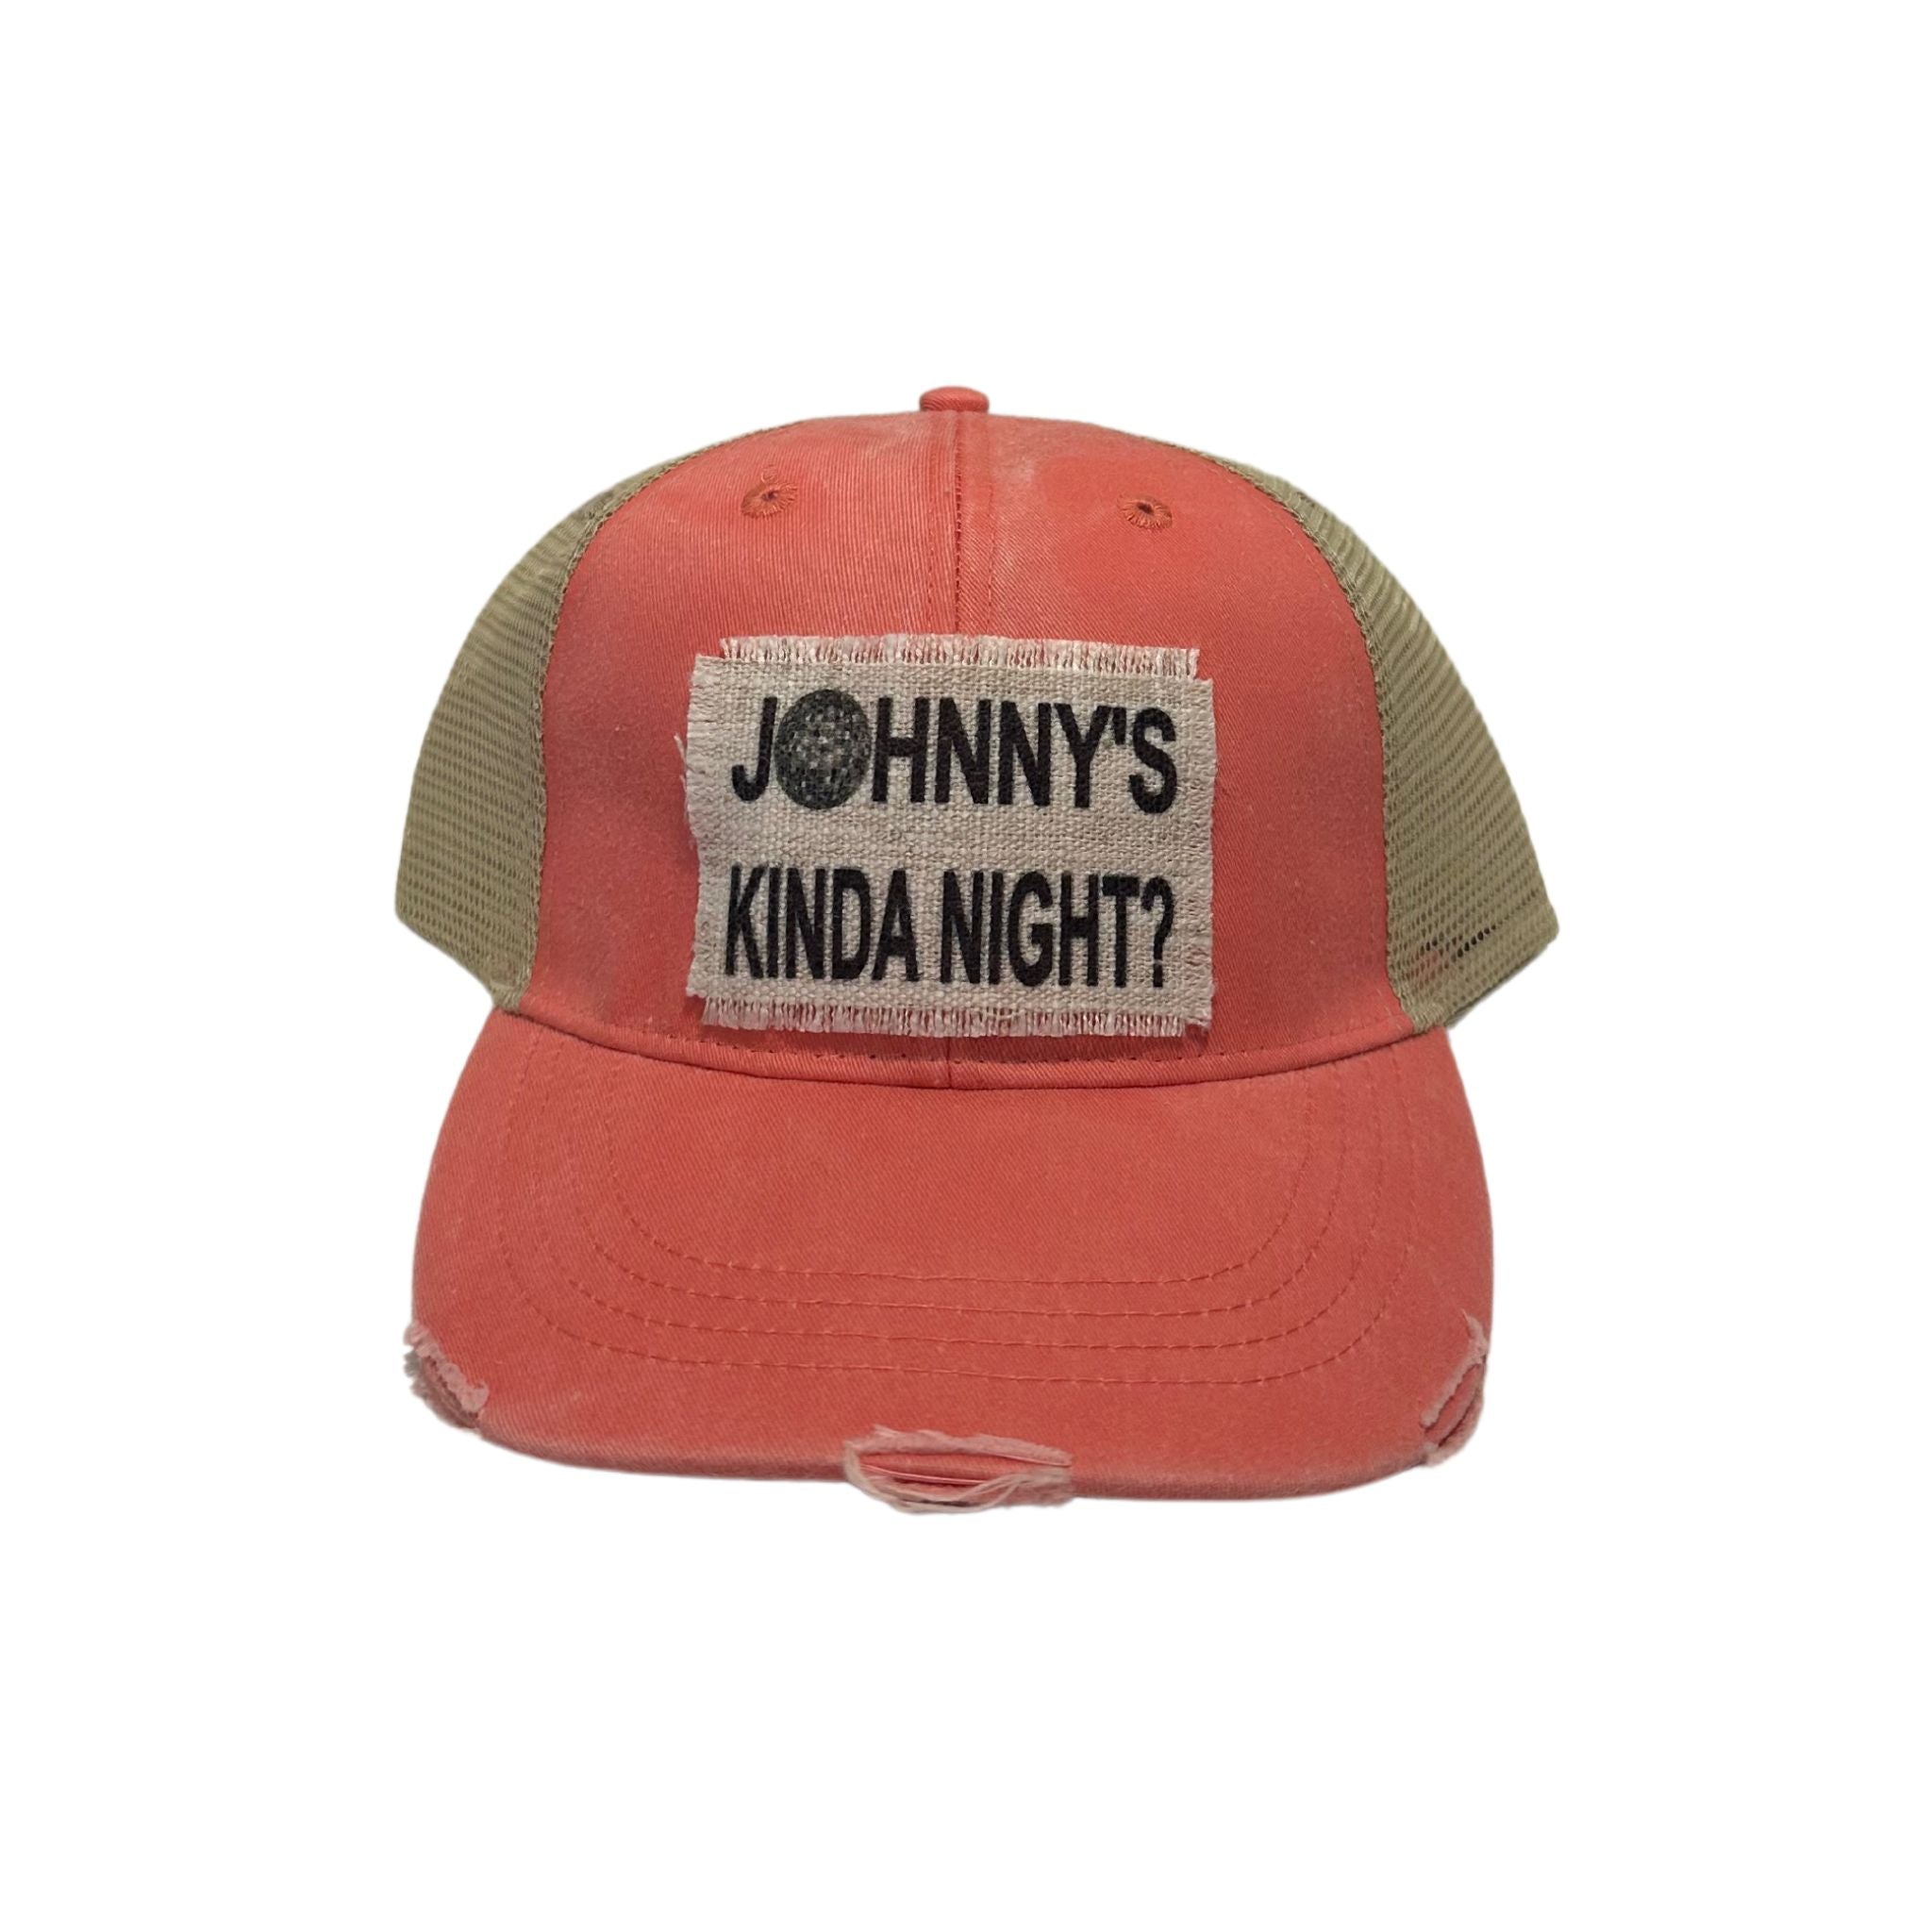 Johnny's Kinda Night?